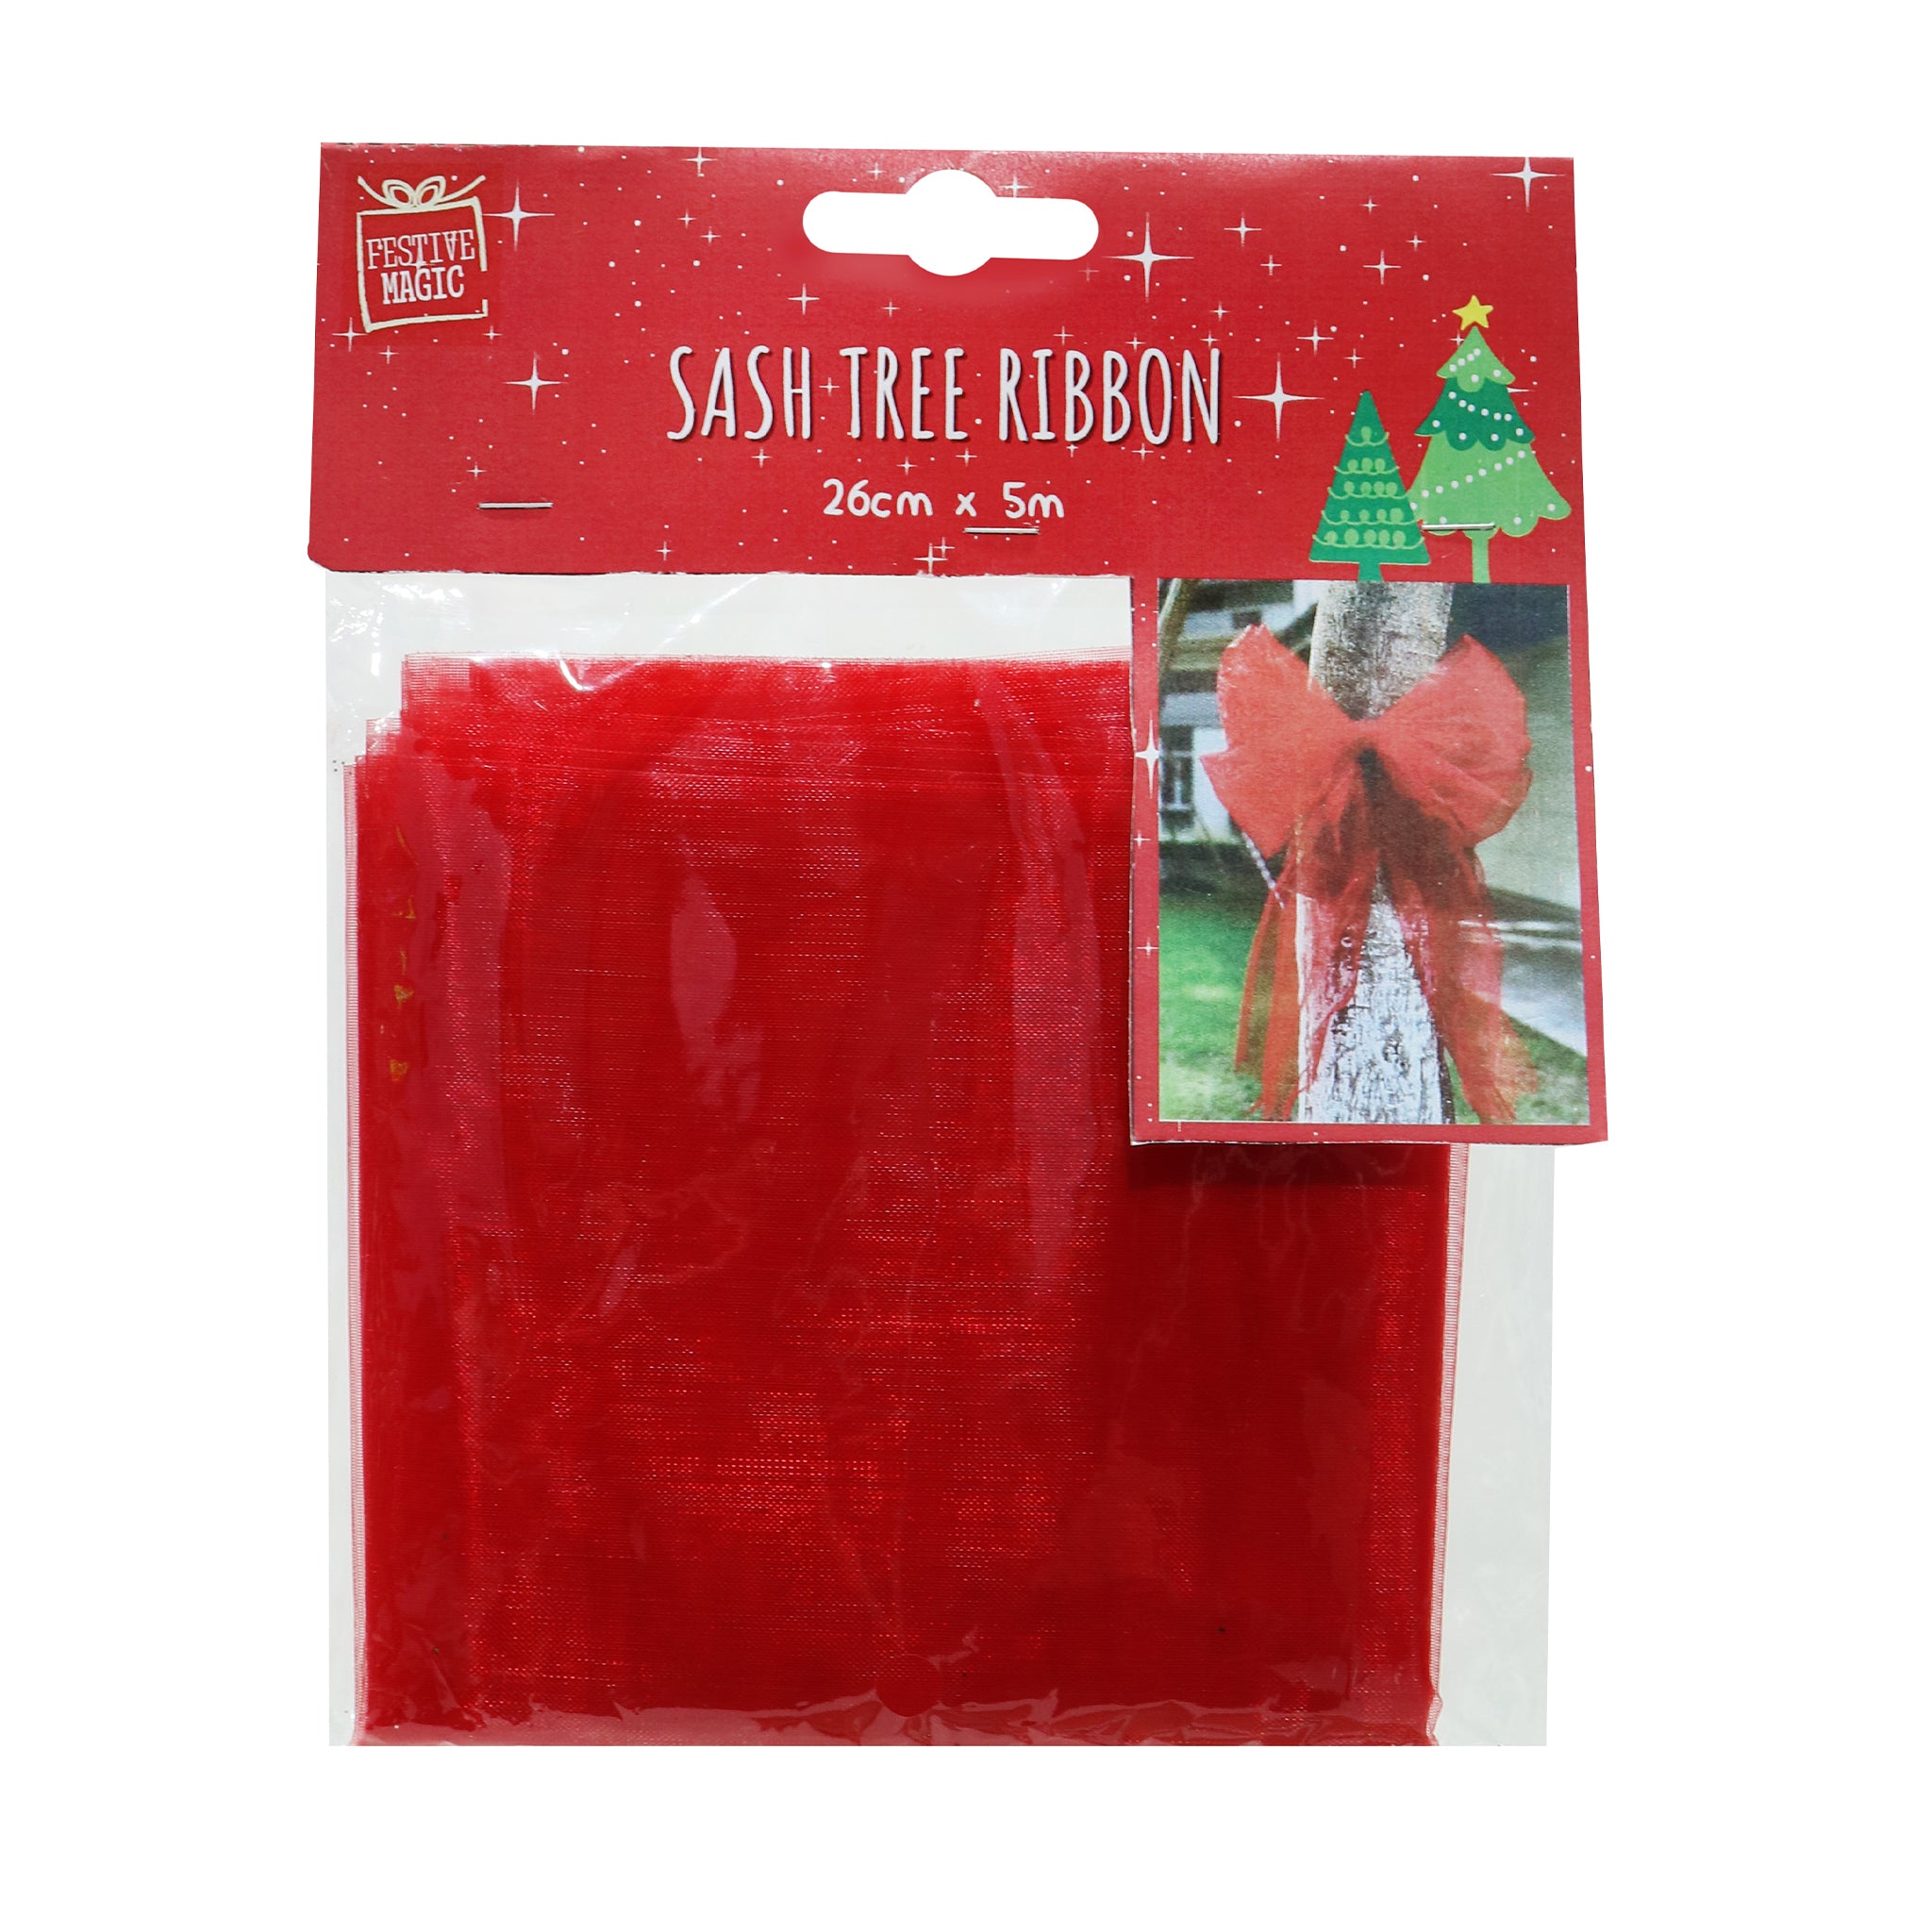 Sash Tree Ribbon